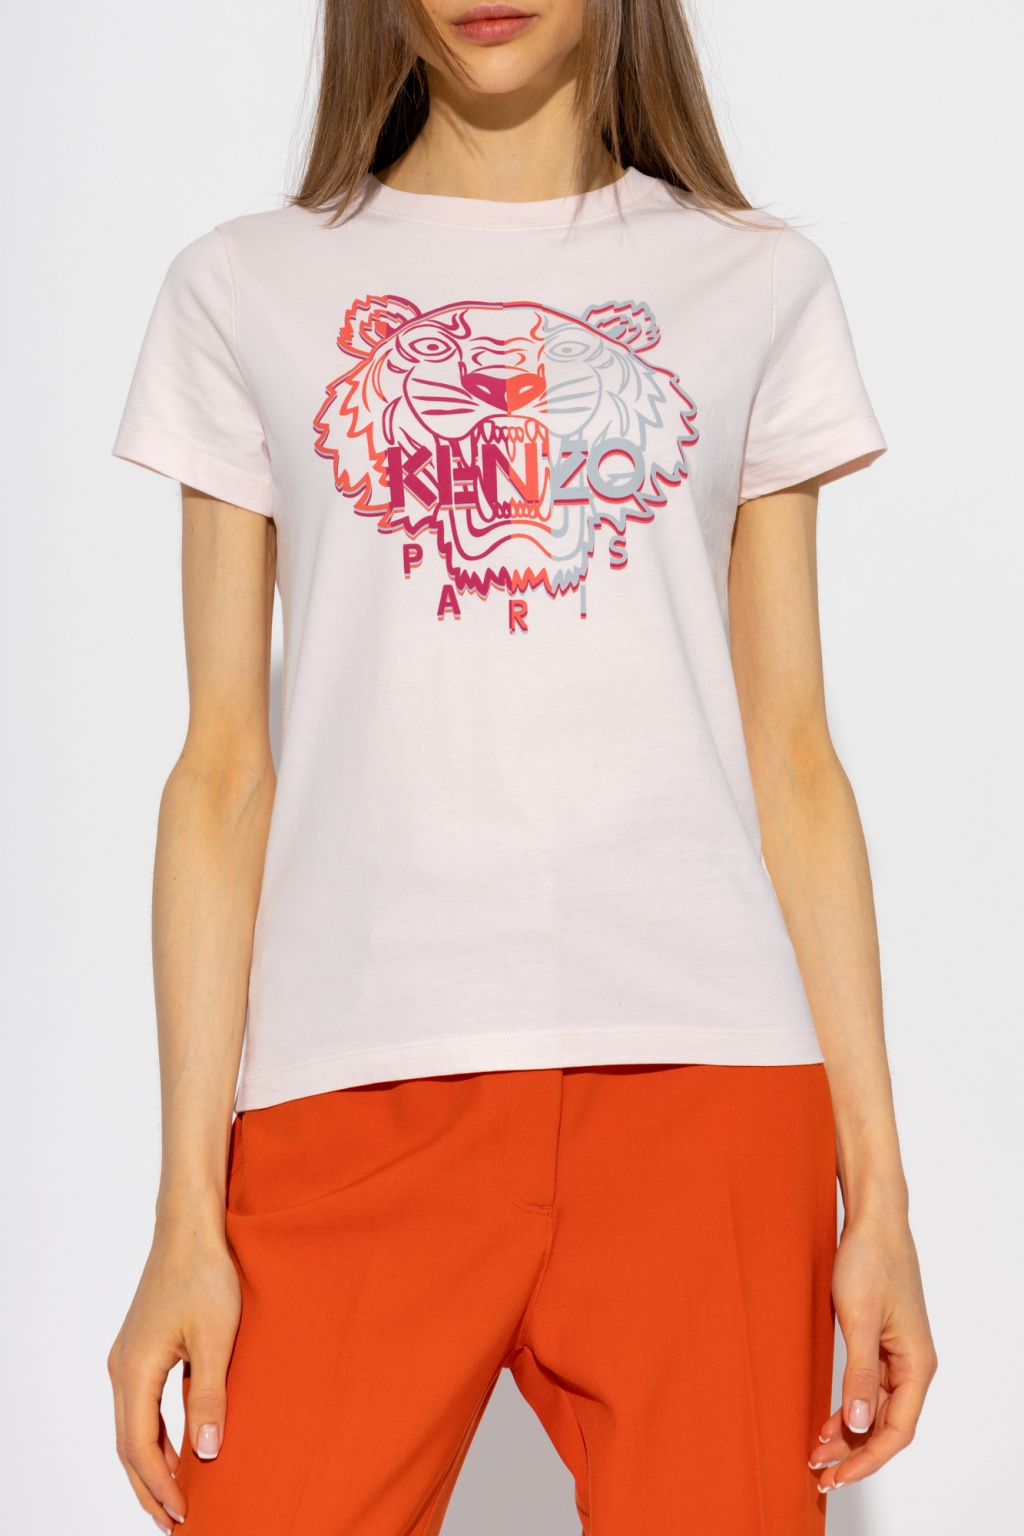 Kenzo Vans Kortärmad T-shirt Lizzie Armanto Mini